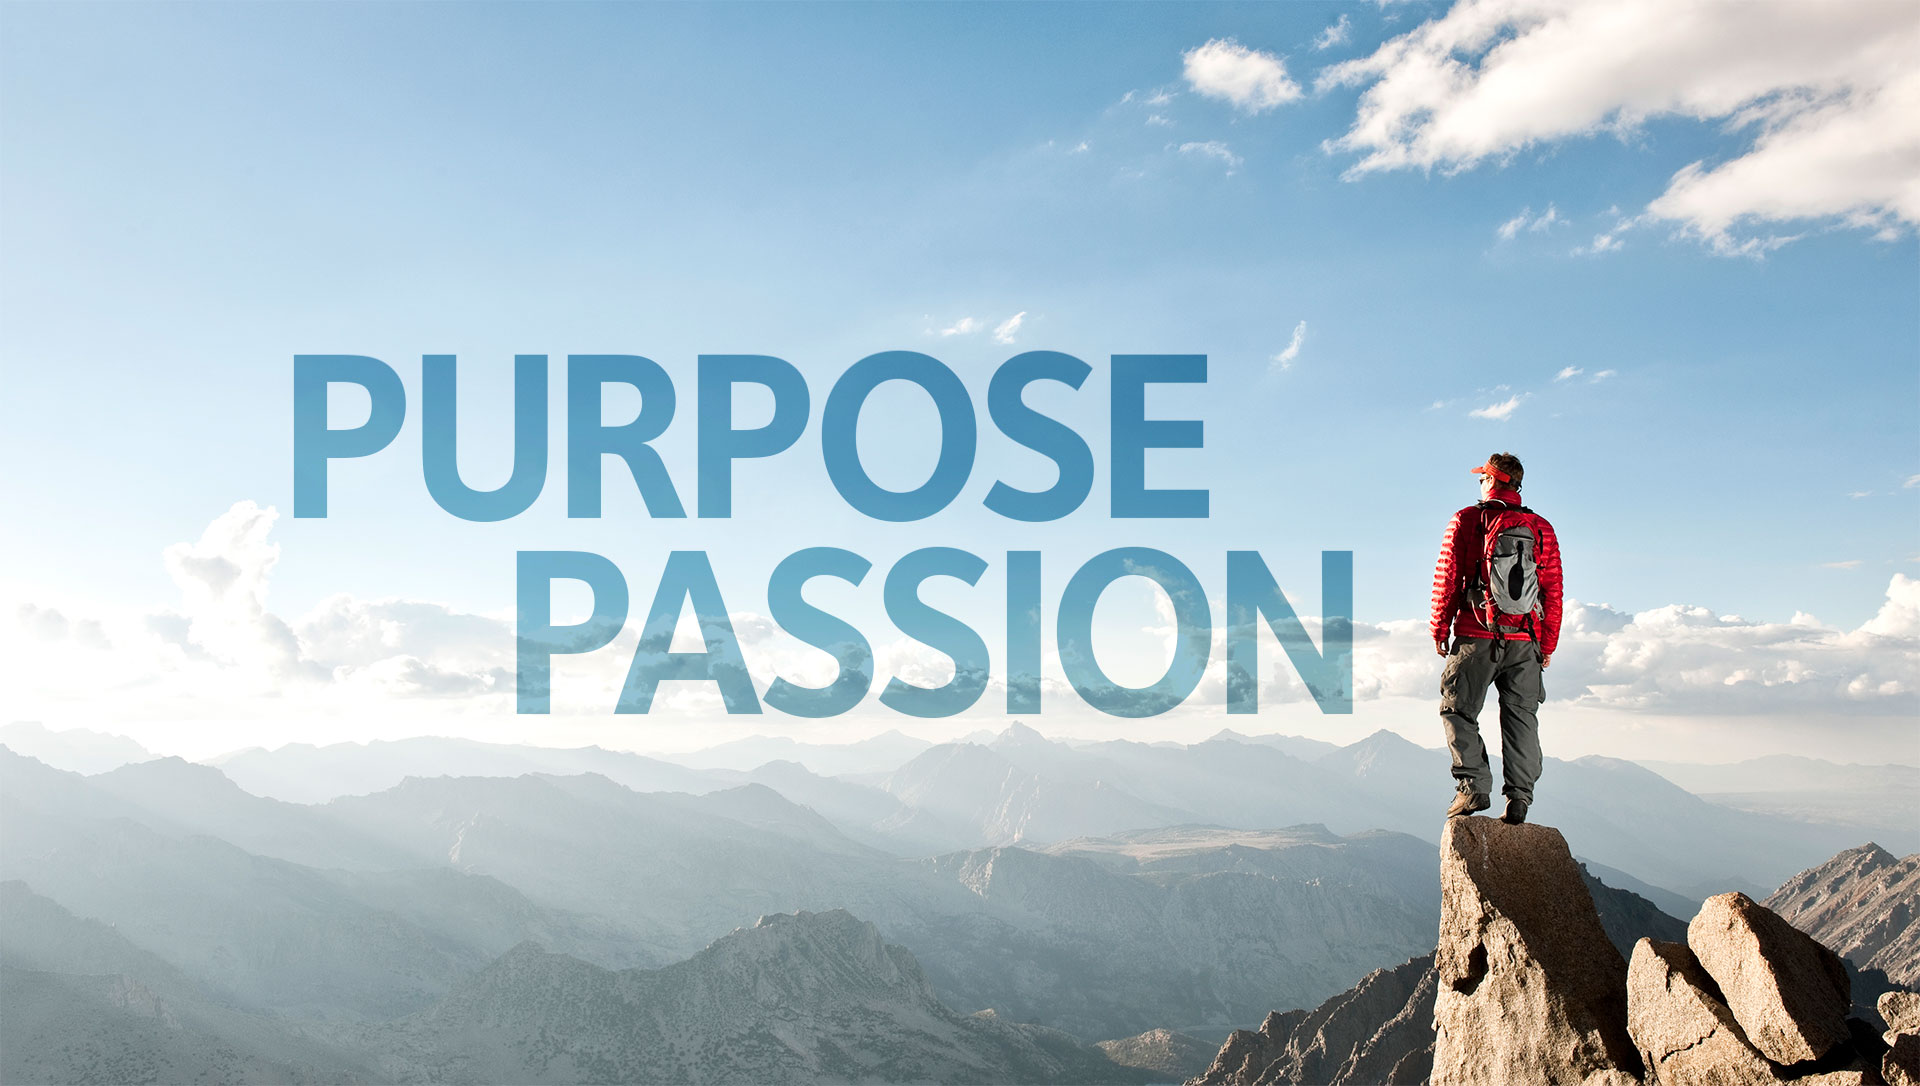 Purpose of life is. Passion. Purpose. Аватарка purpose стиль. Purpose картинки для презентаций.